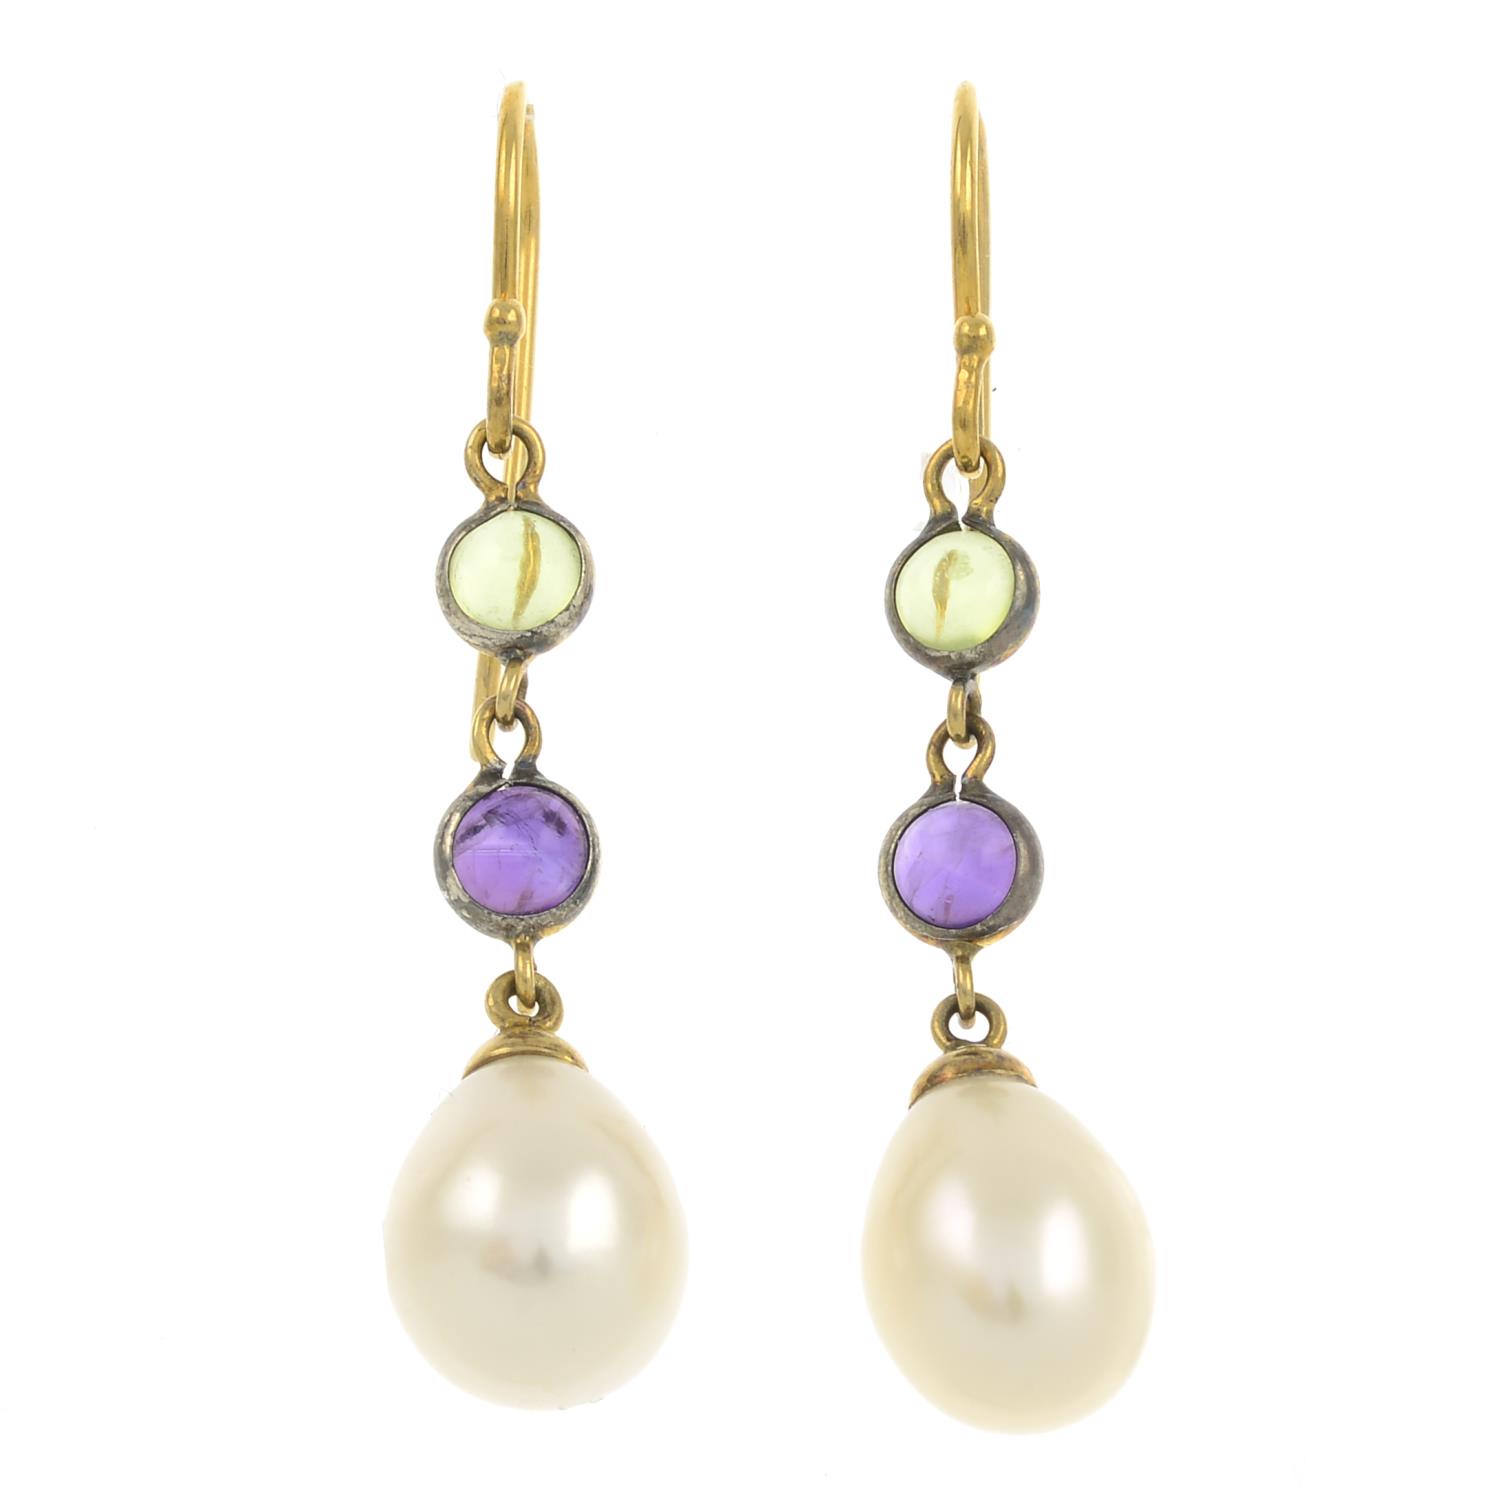 A pair of freshwater cultured pearl, amethyst and peridot drop earrings.